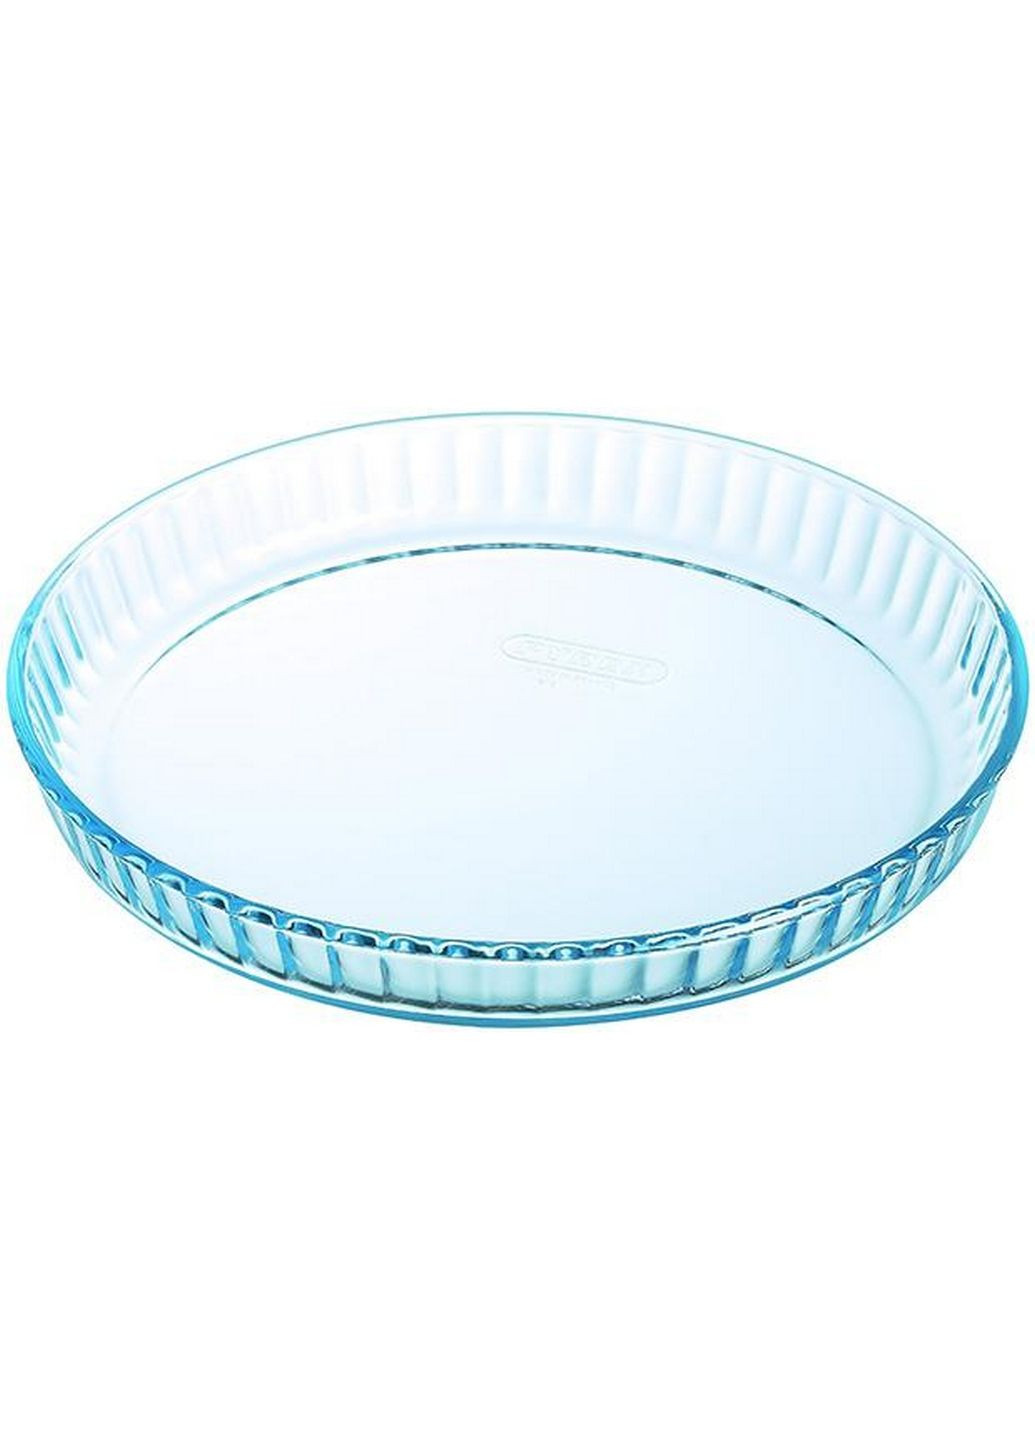 Форма для запекания Bake&Enjoy, жаропрочное стекло Ø27х3,5 см Pyrex (289363948)